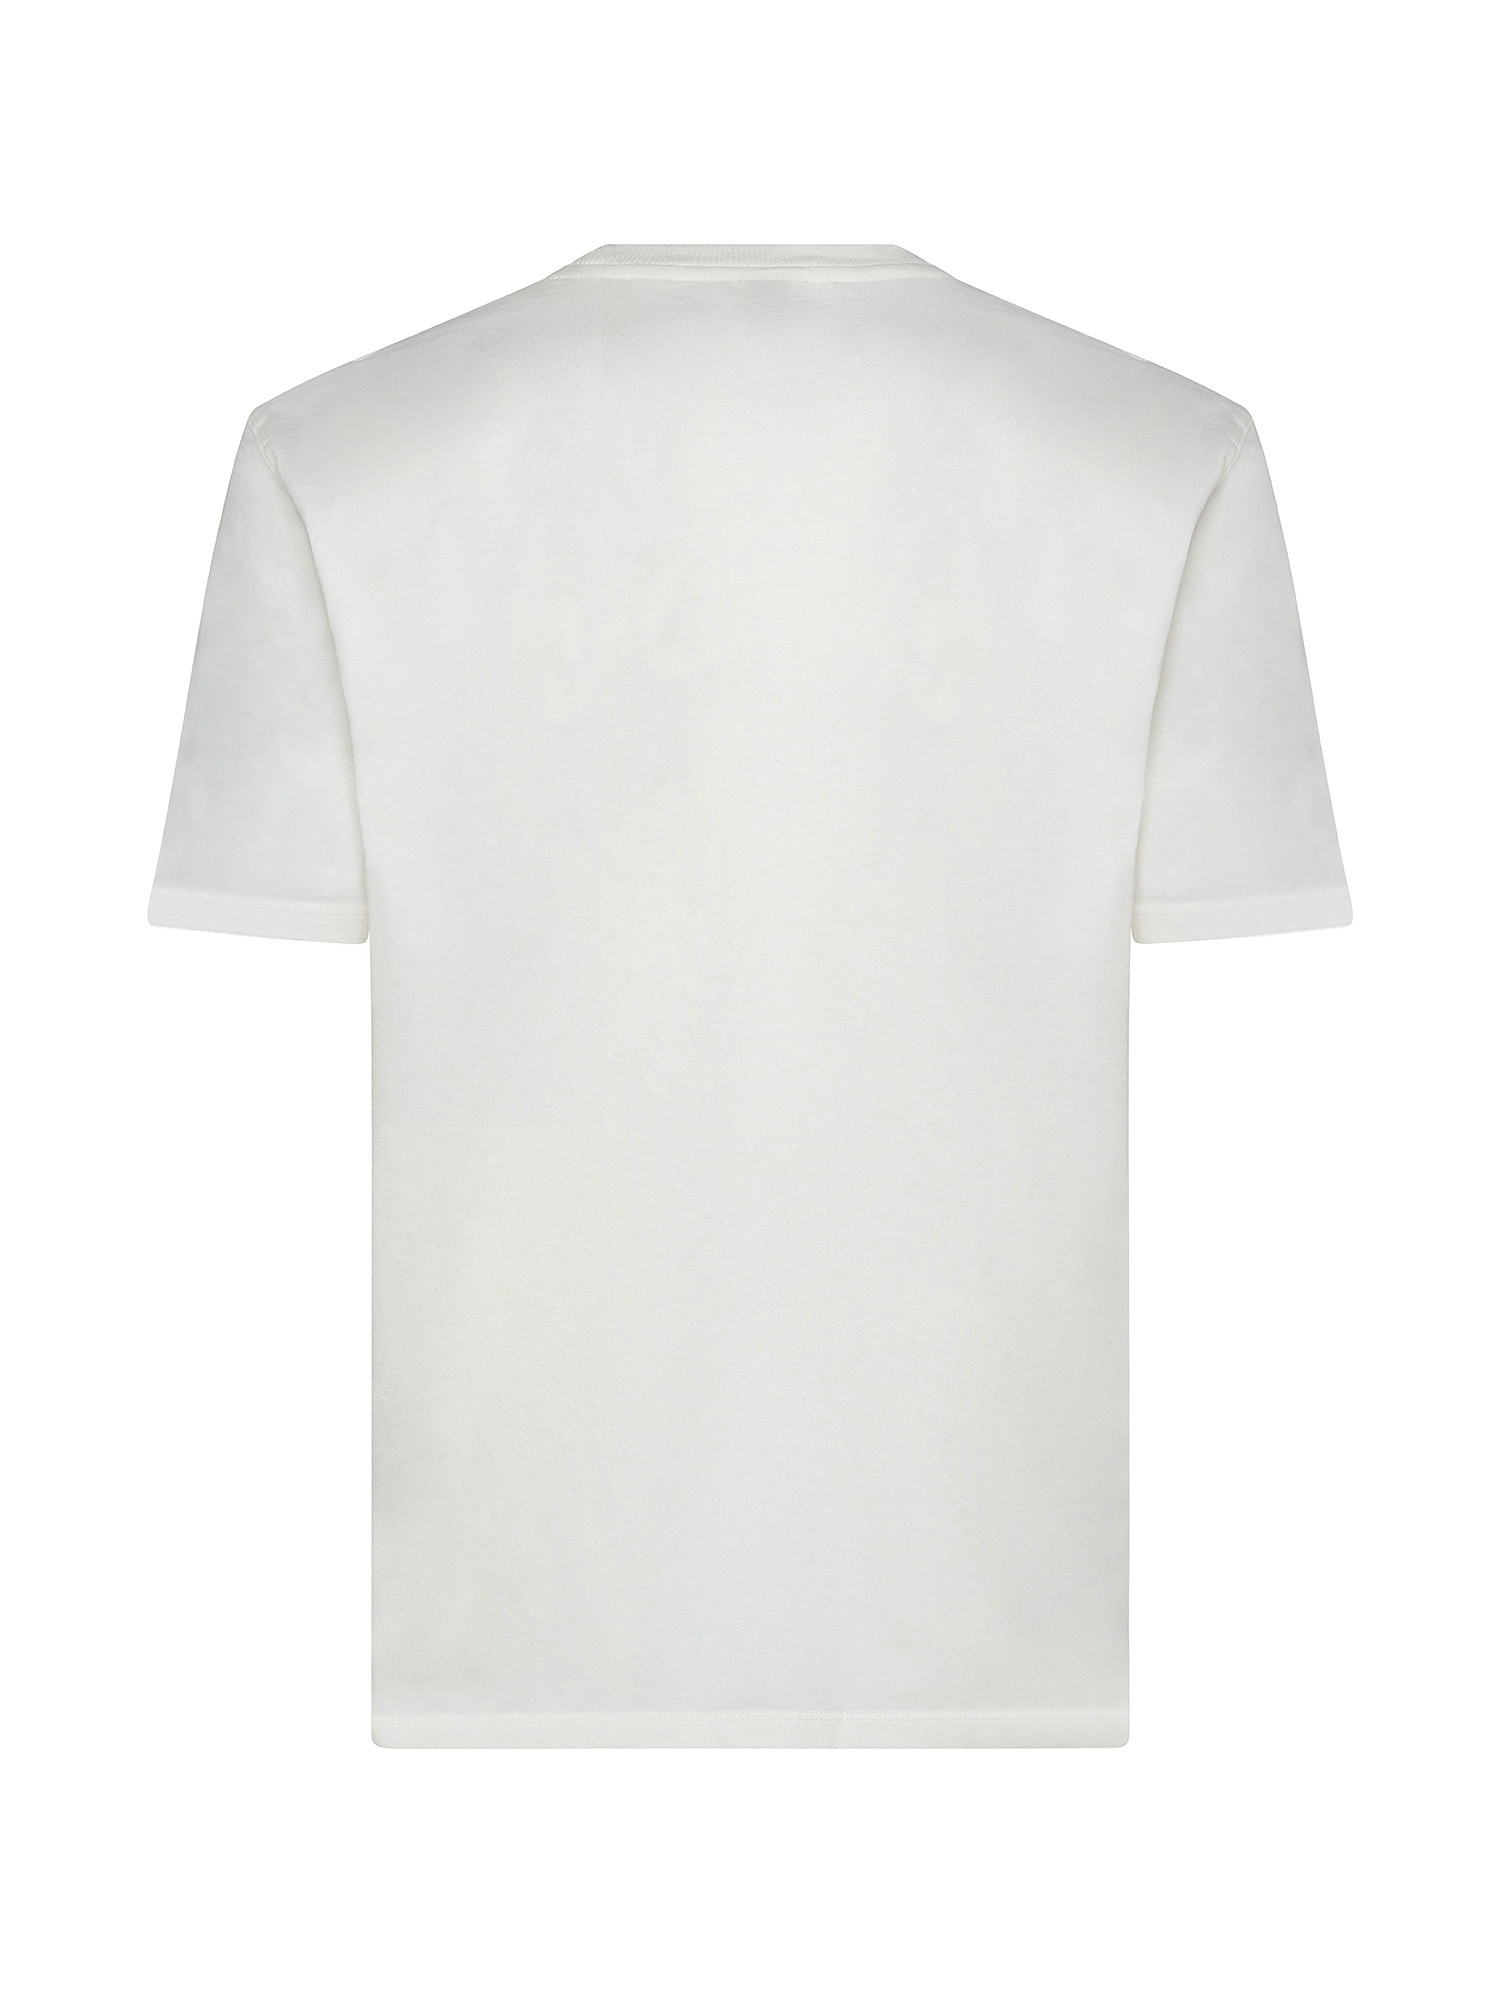 Baseball Ted T-Shirt, White, large image number 1